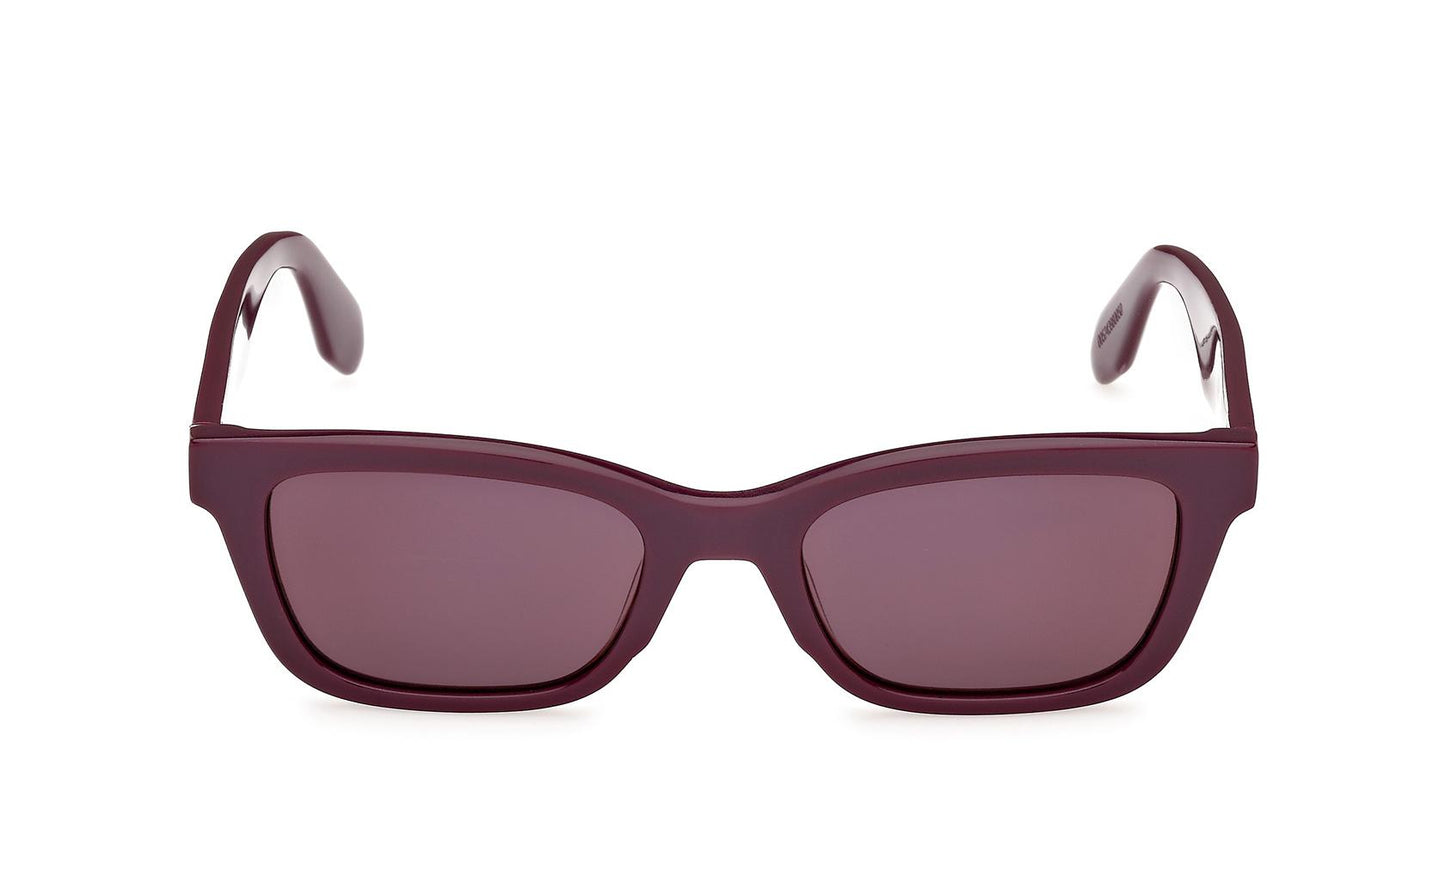 Adidas Originals Sunglasses OR0117 81U